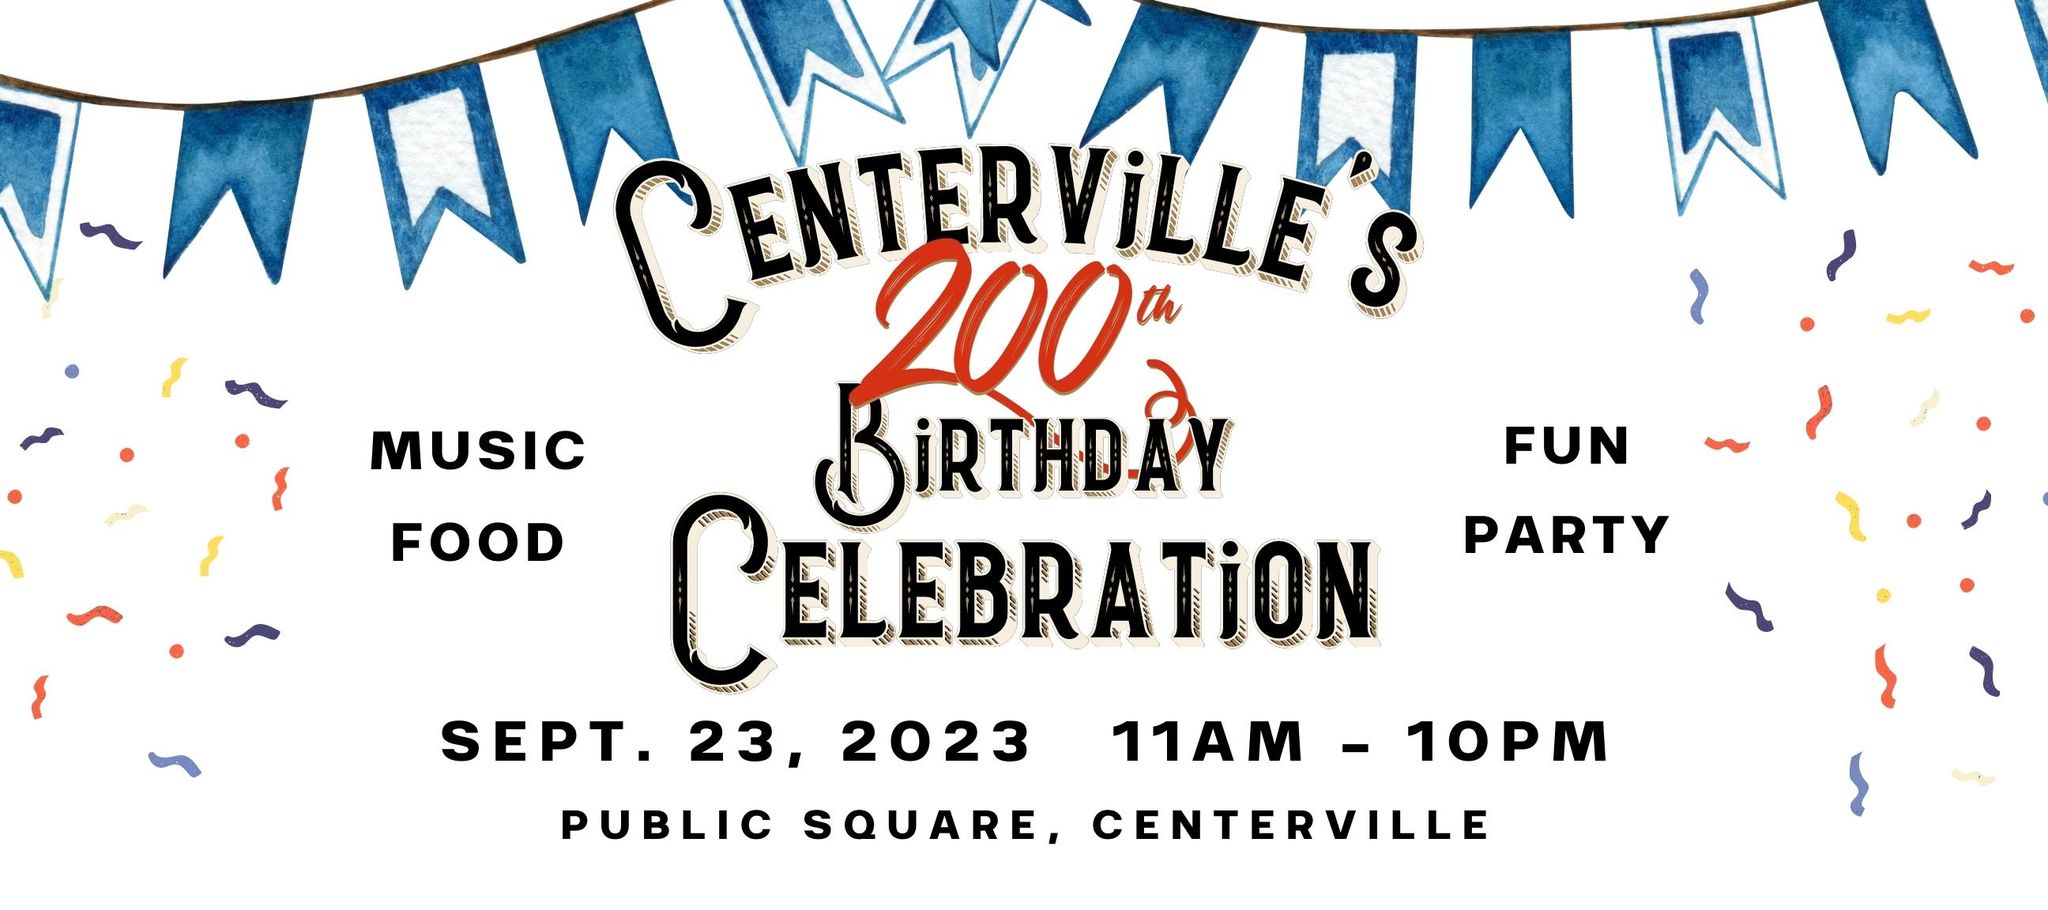 Centerville's 200th Birthday Celebration